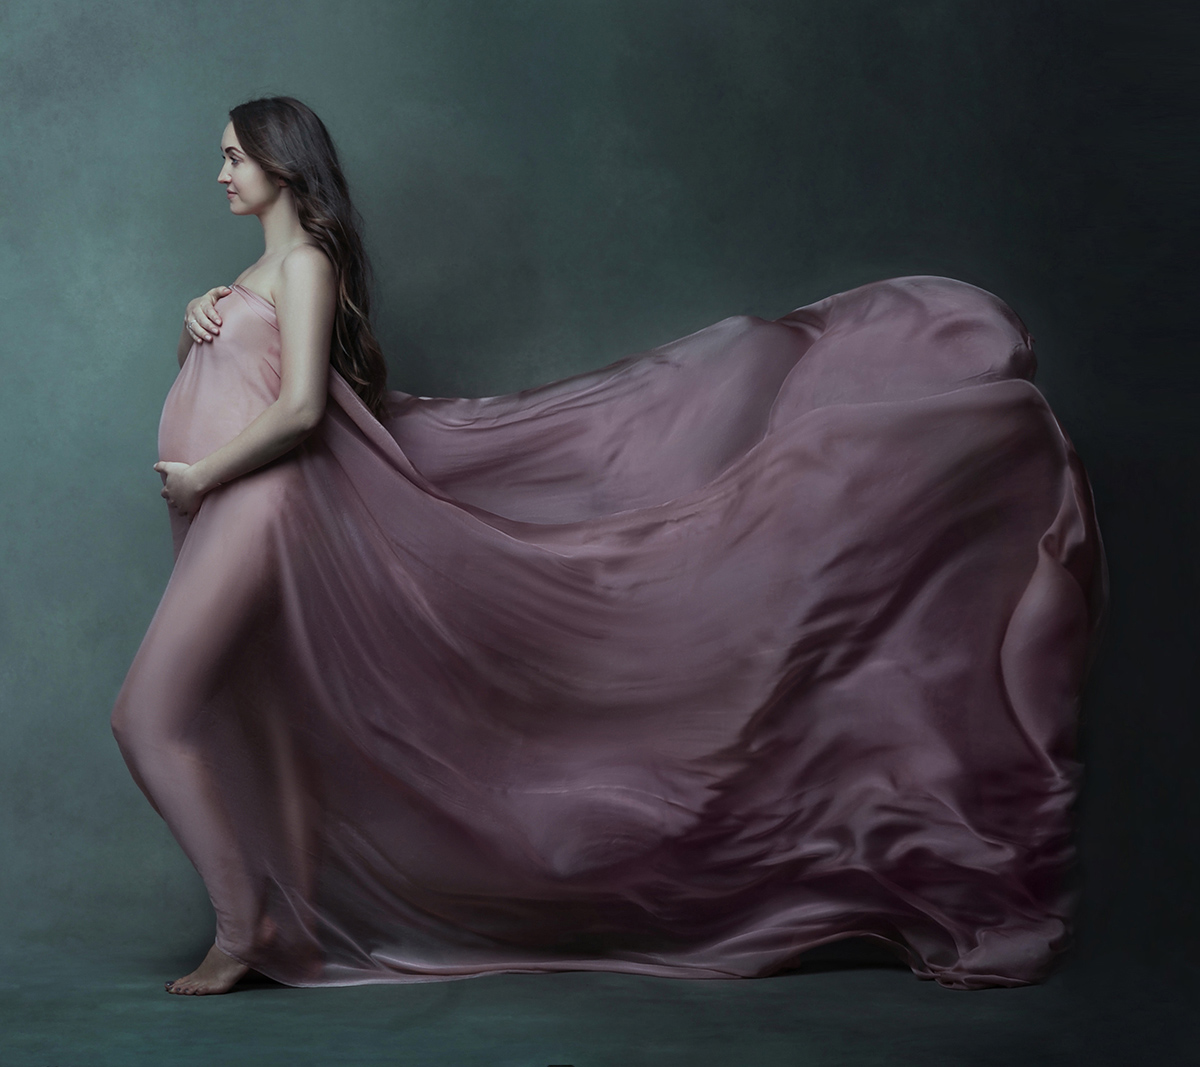 Pregnancy and Postpartum Mental Health